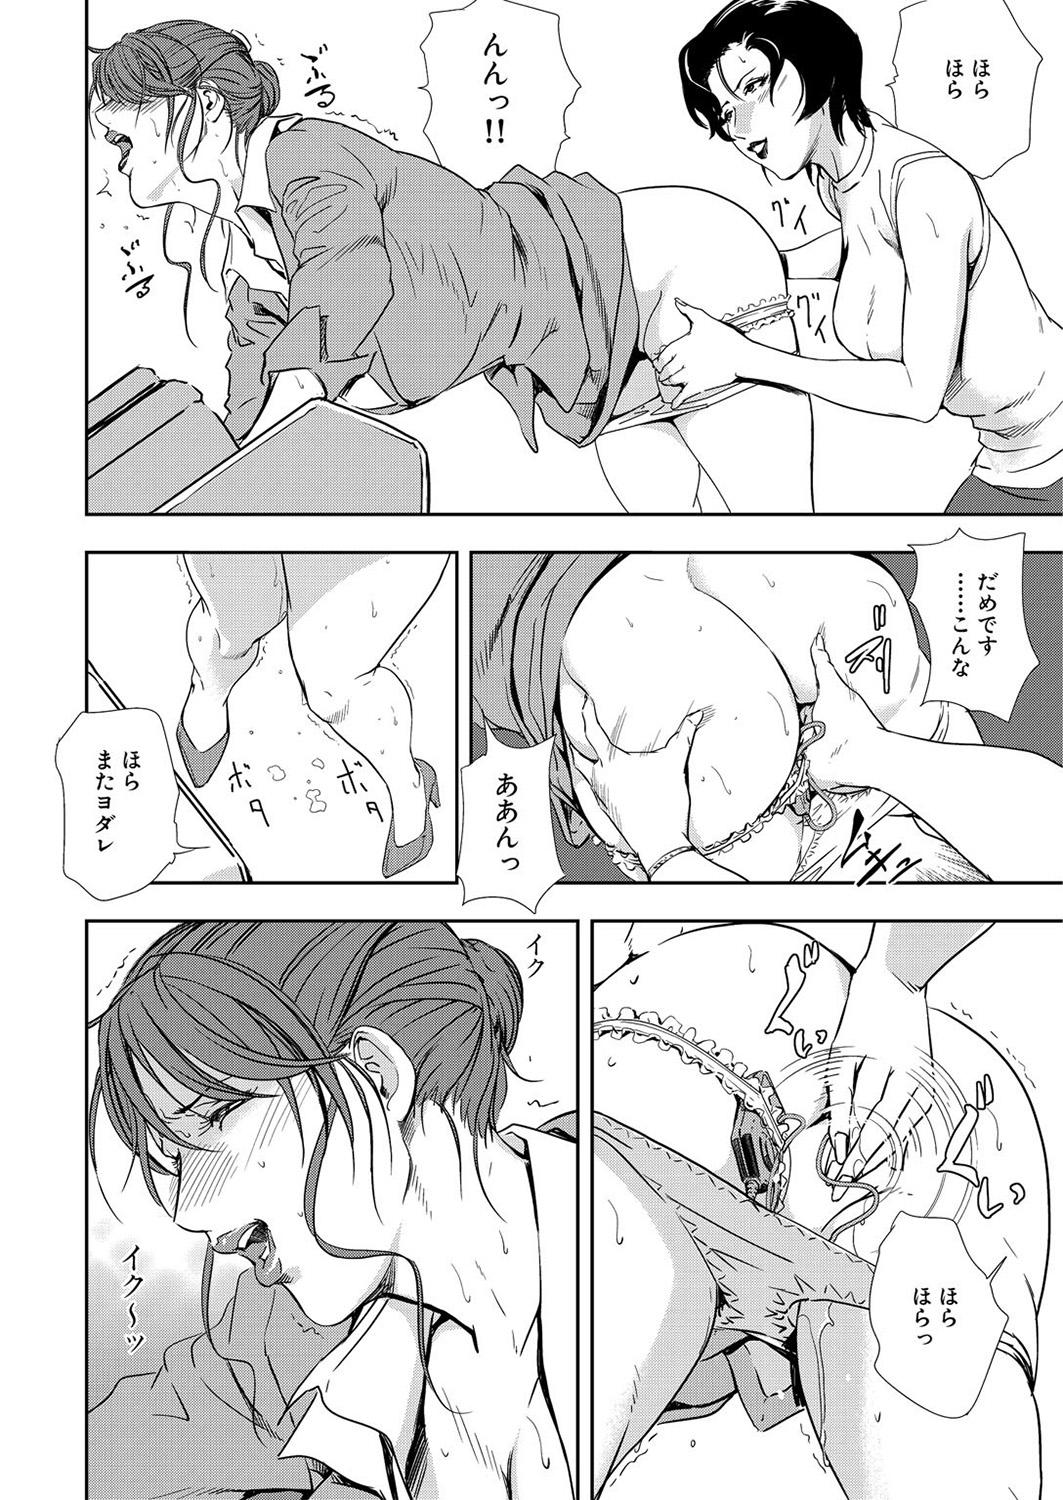 Blowing Nikuhisyo Yukiko 9 For - Page 8